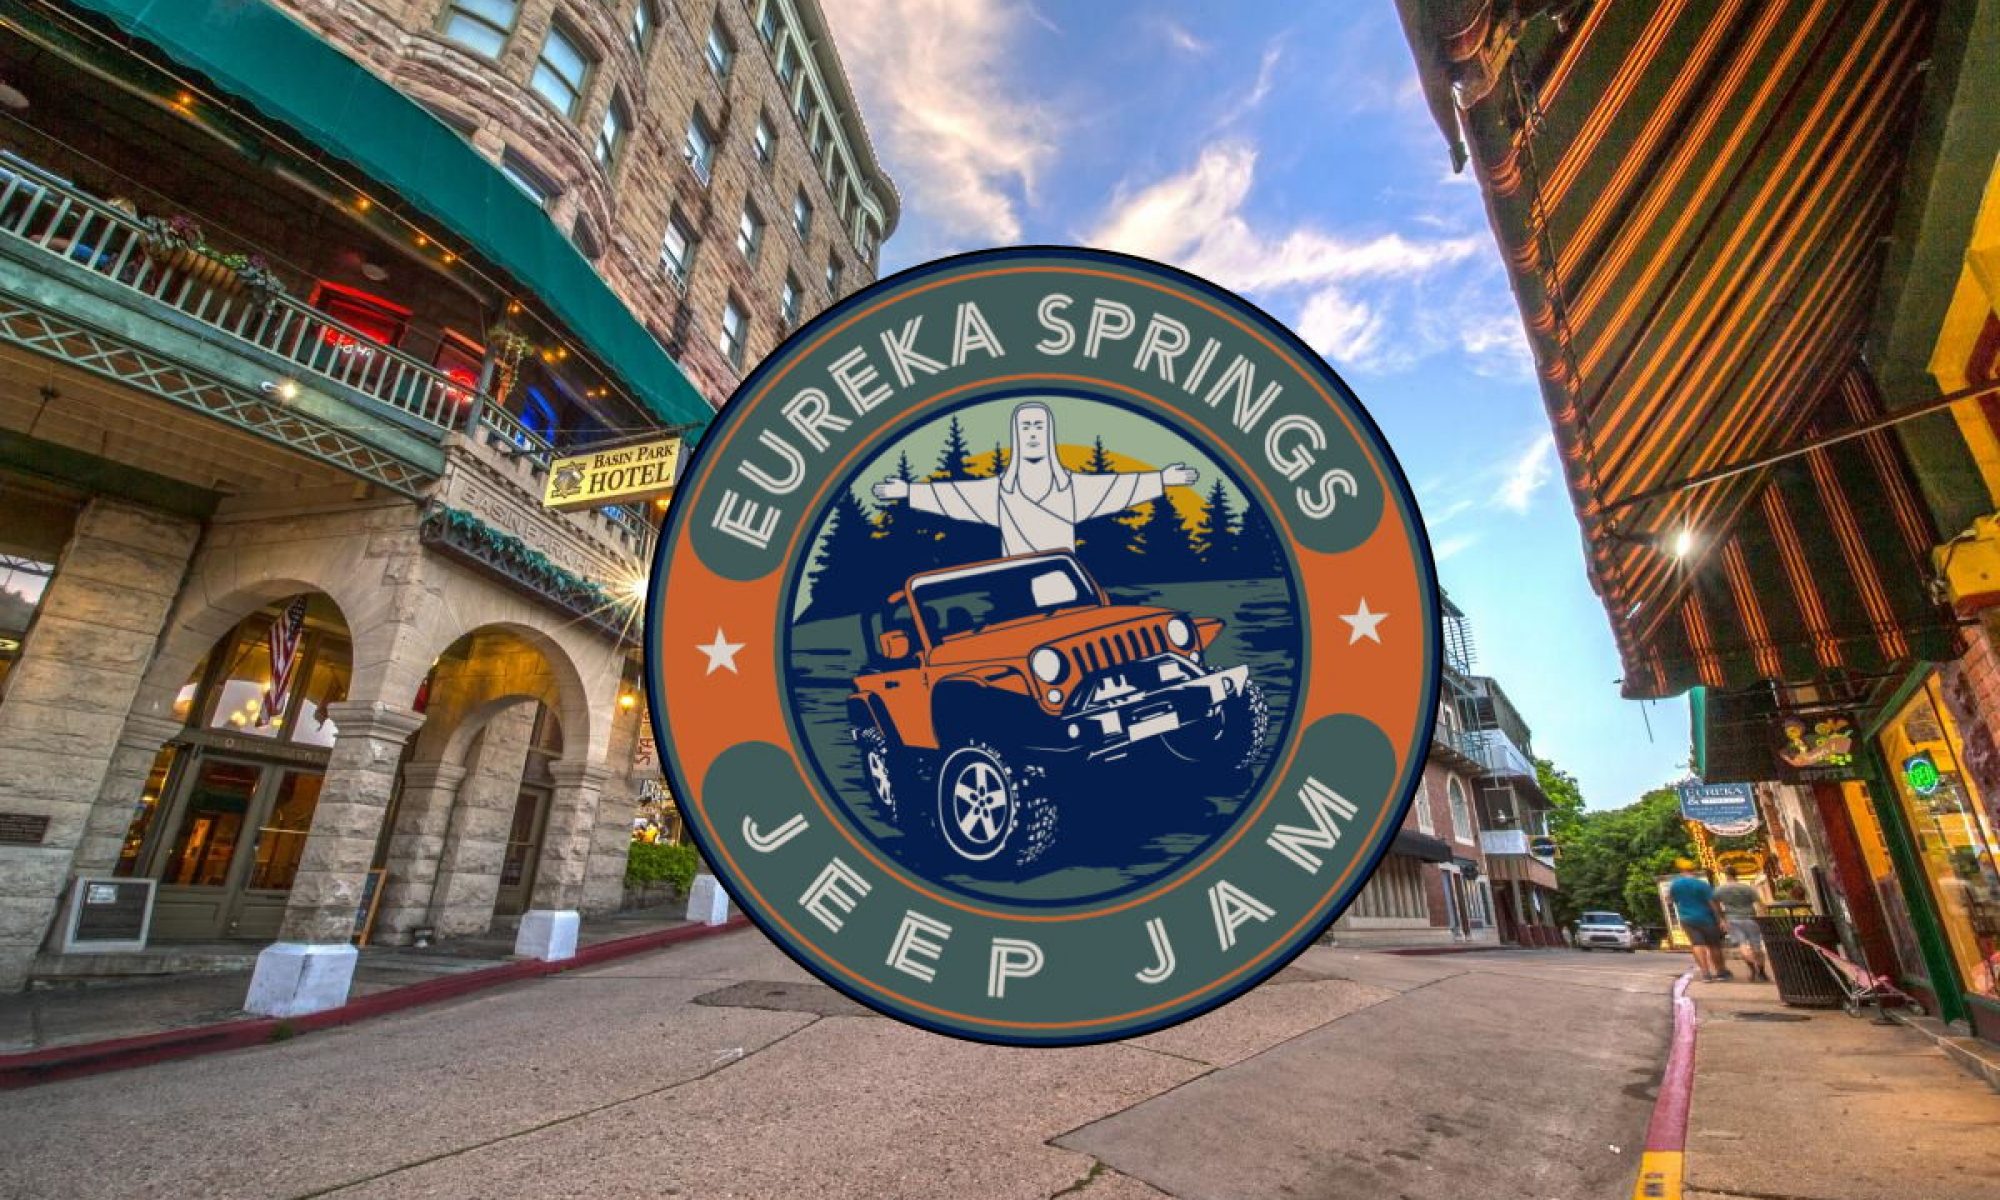 Eureka Springs Jeep Jam